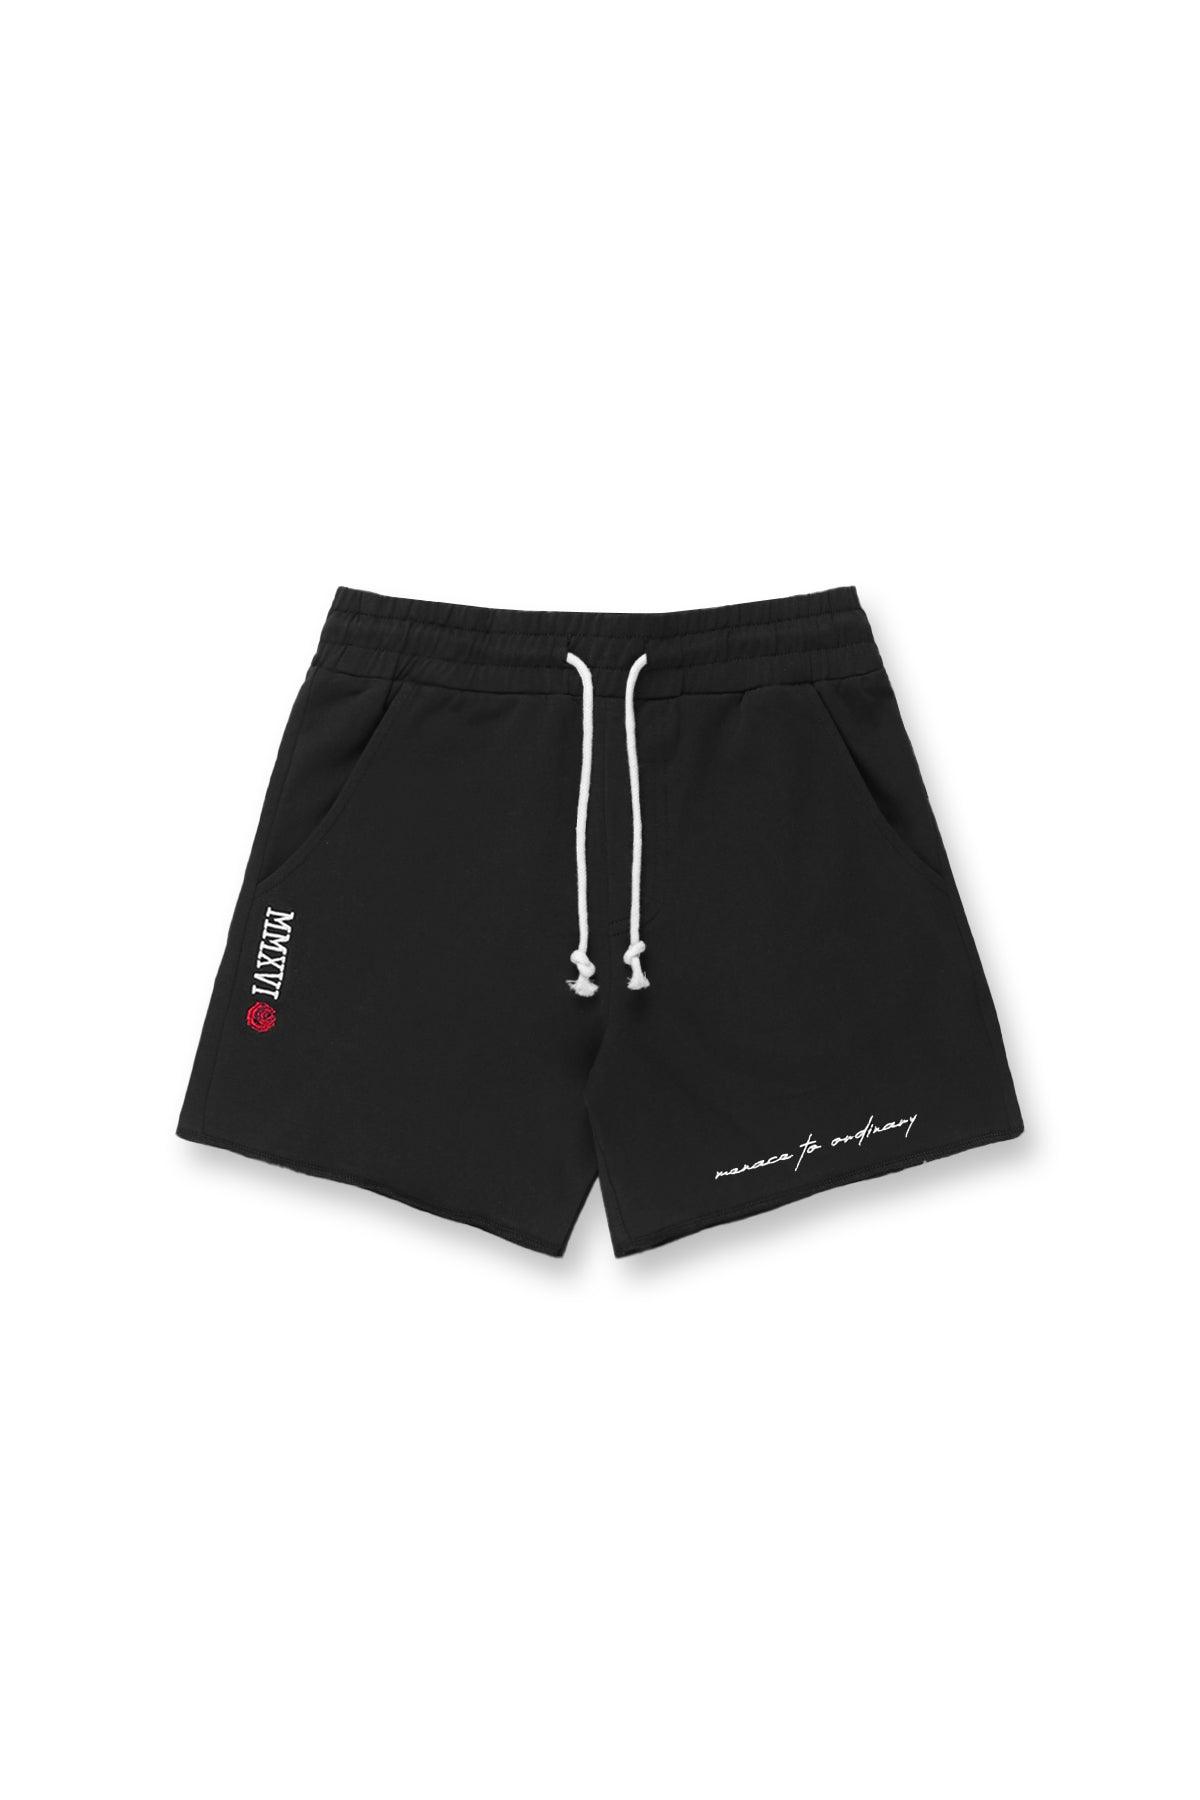 Motion 5'' Varsity Sweat Shorts - Black & White - Jed North